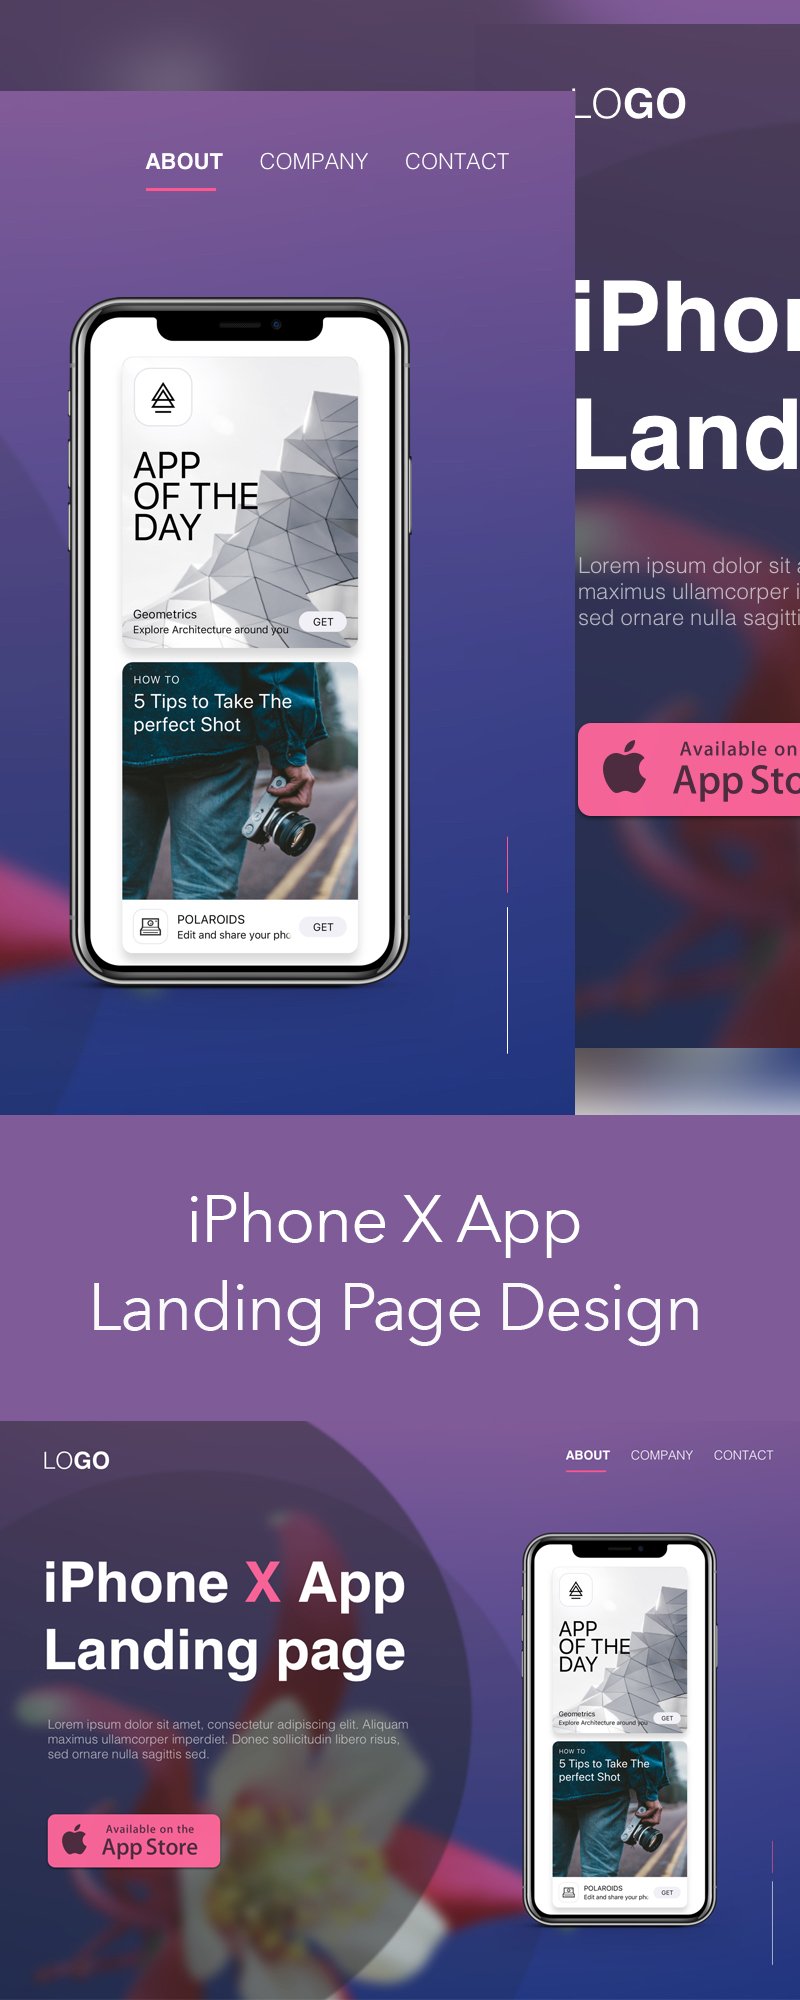 iPhone X Landing Page Design